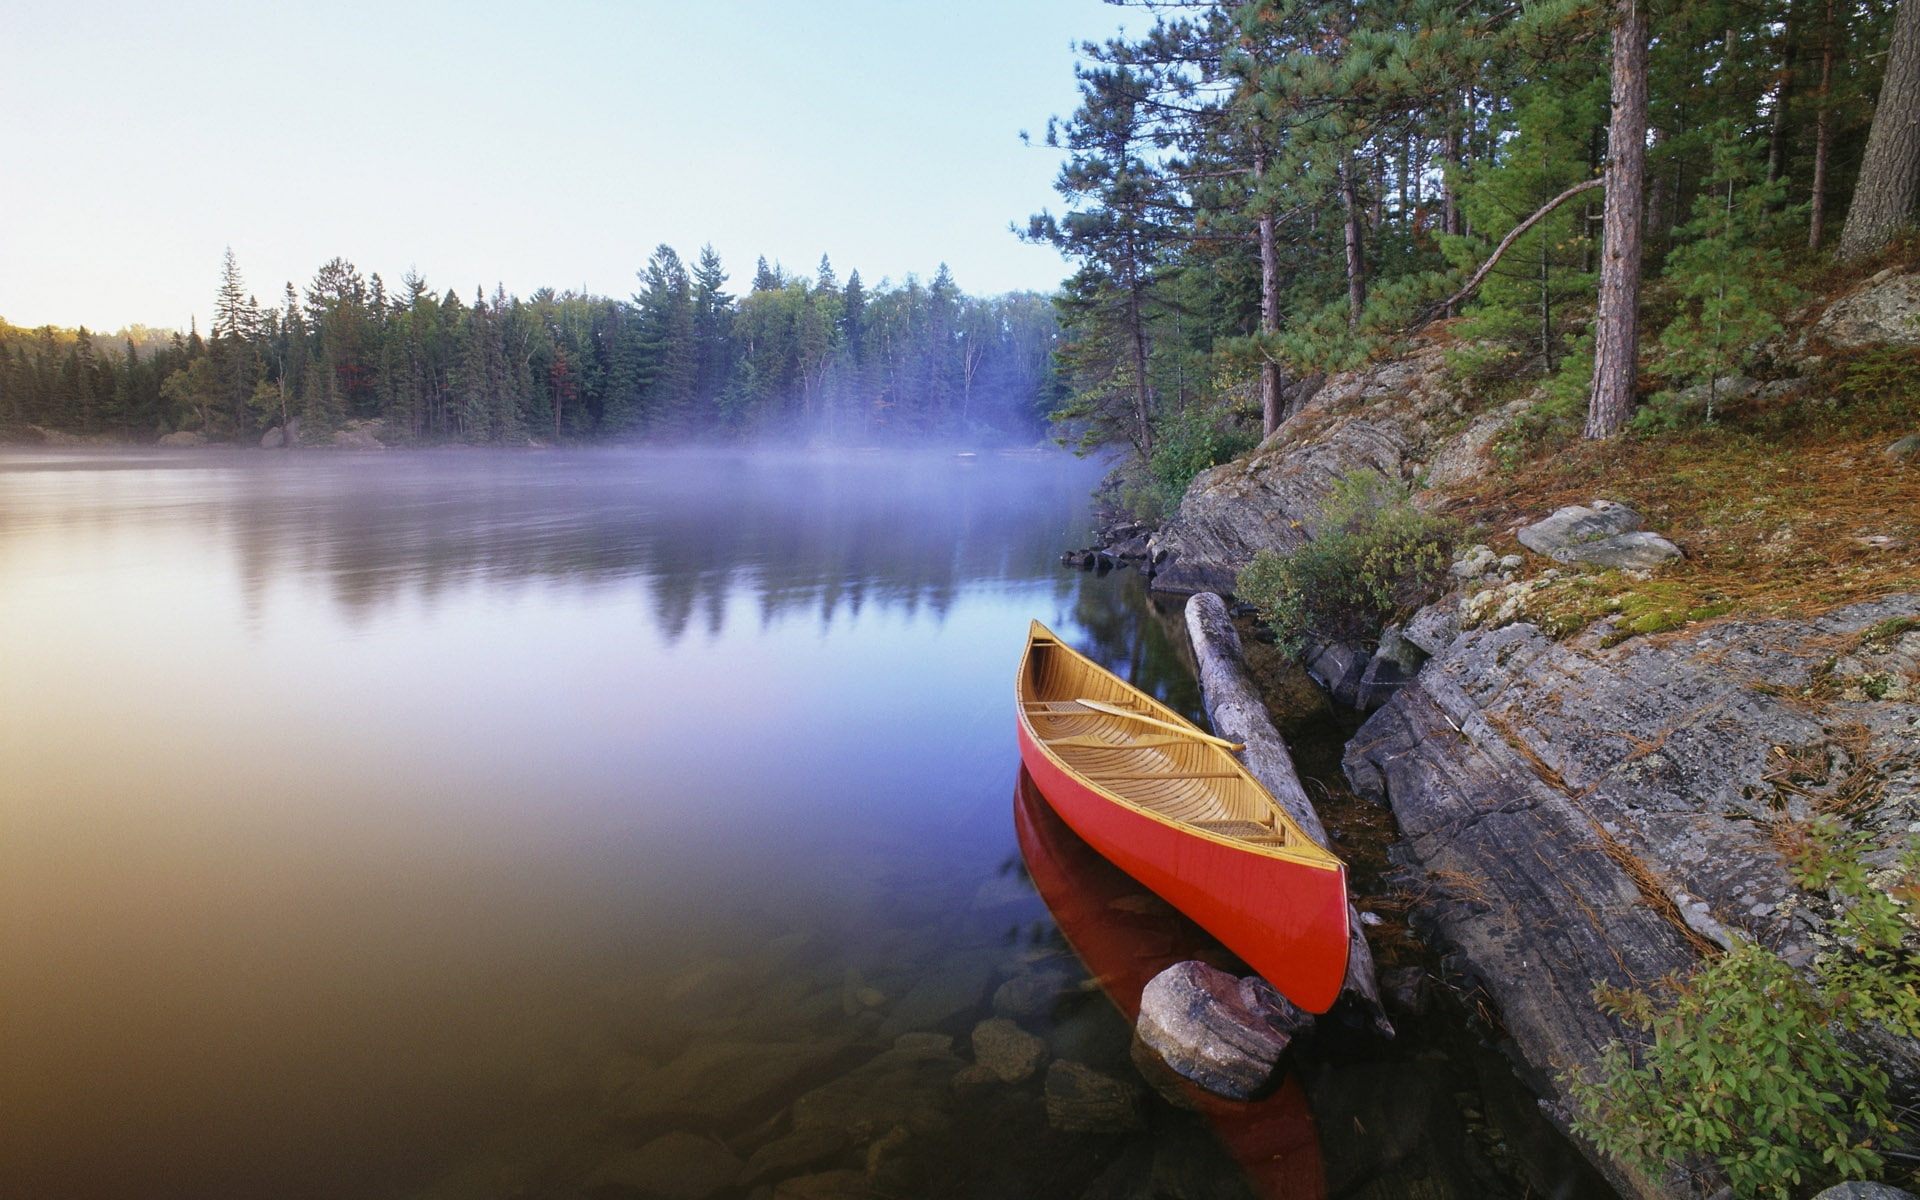 Canoe on Pinetree Lake, Canada